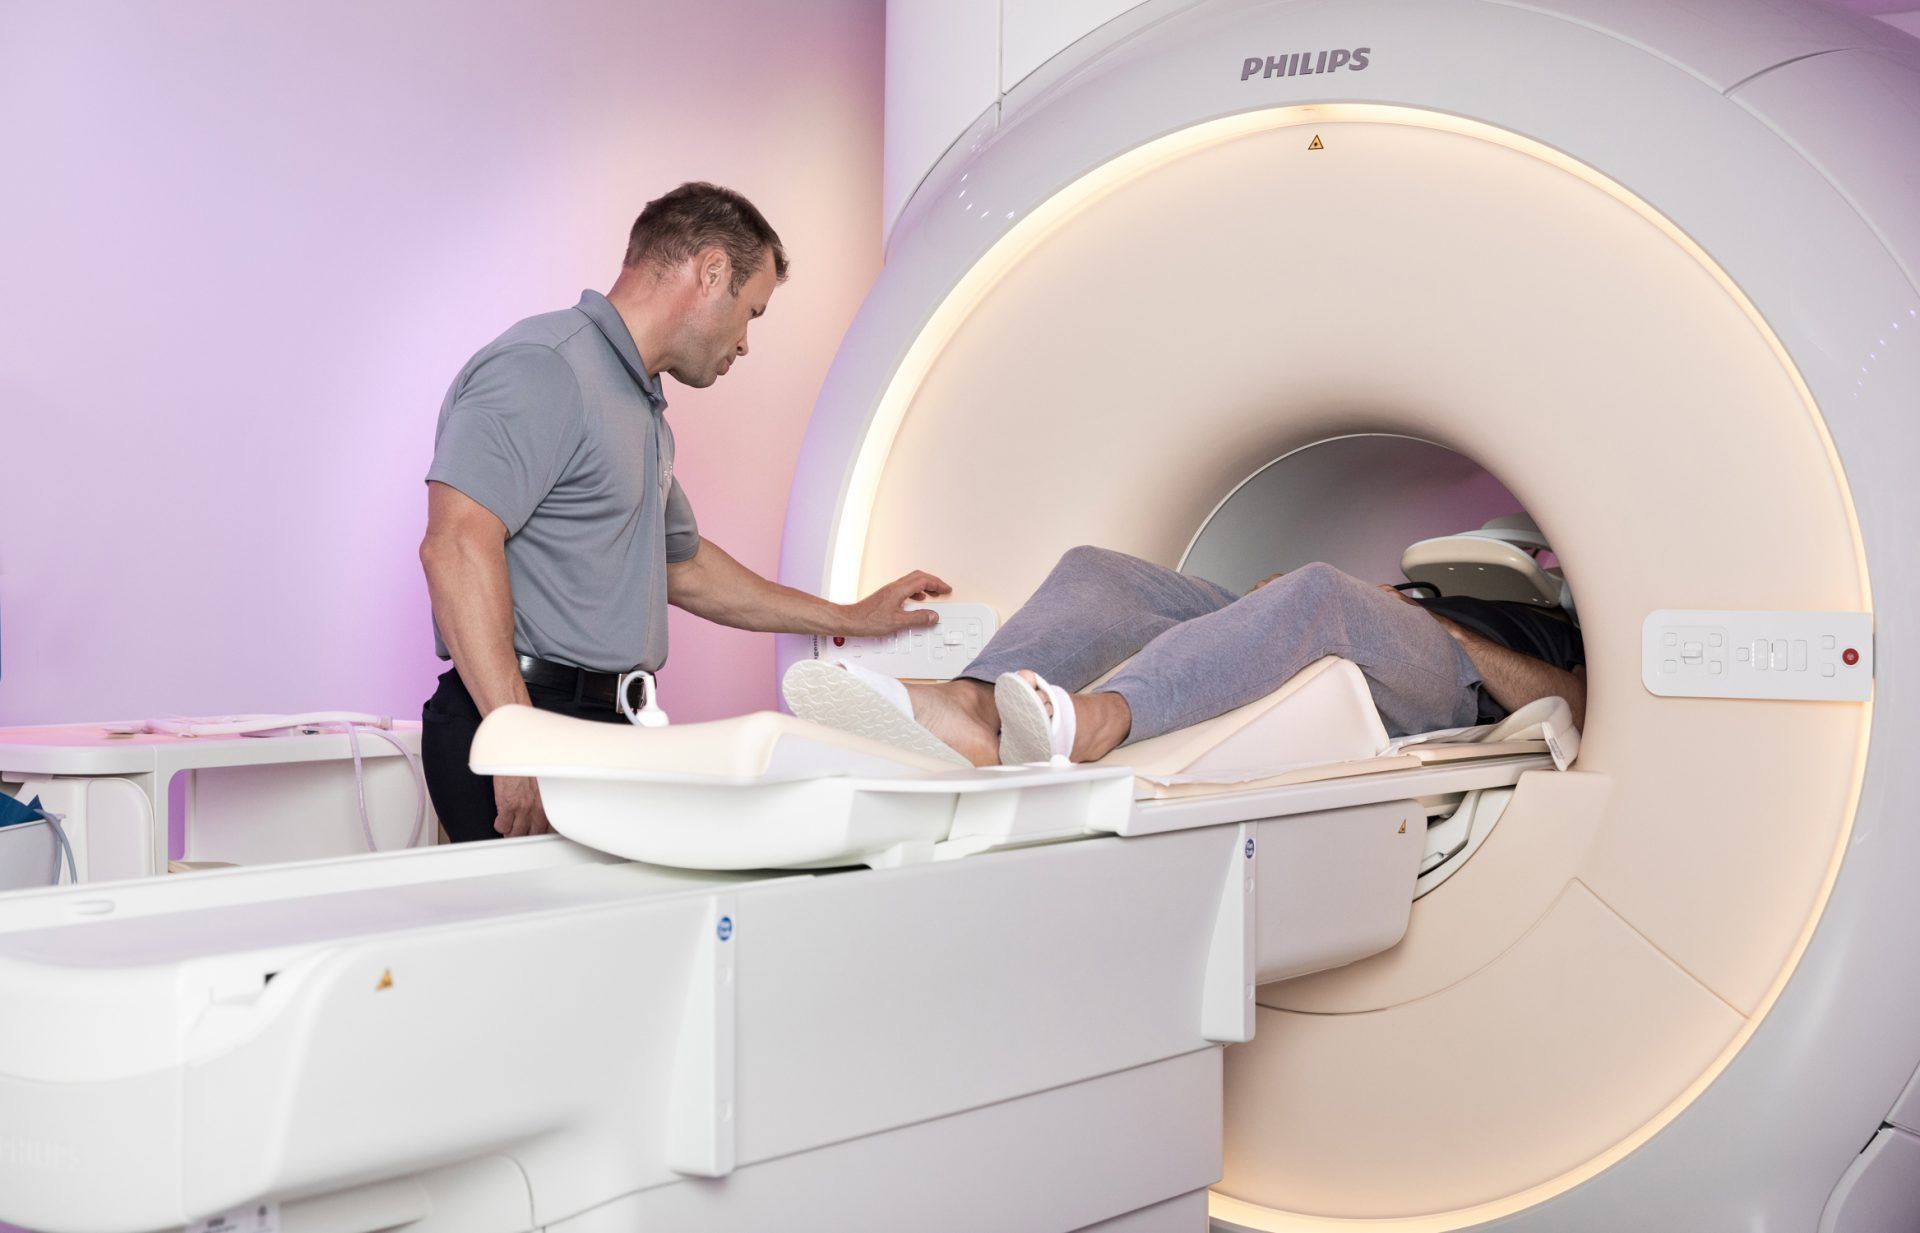 Should you consider a full body MRI scan?